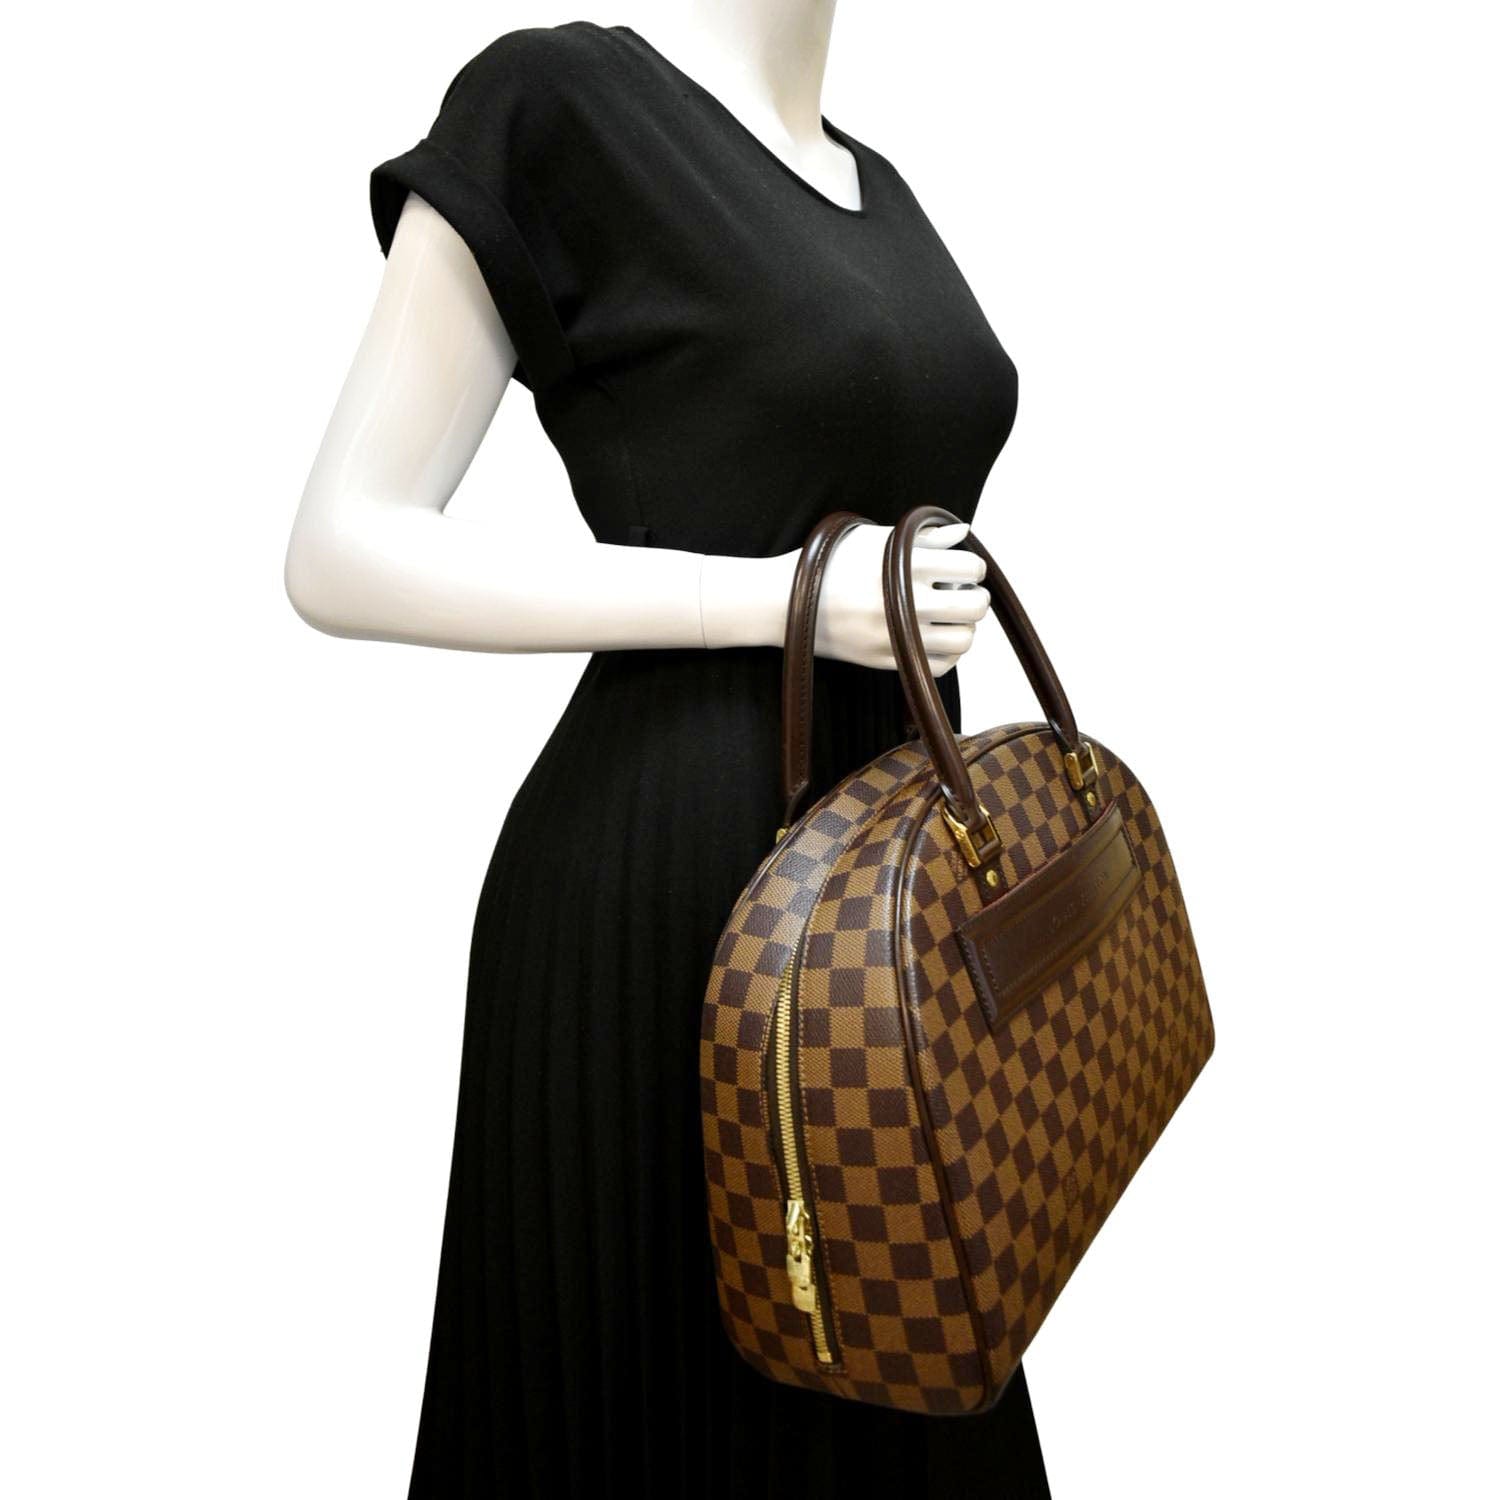 Louis Vuitton Vintage - Damier Ebene Nolita Bag - Brown - Damier